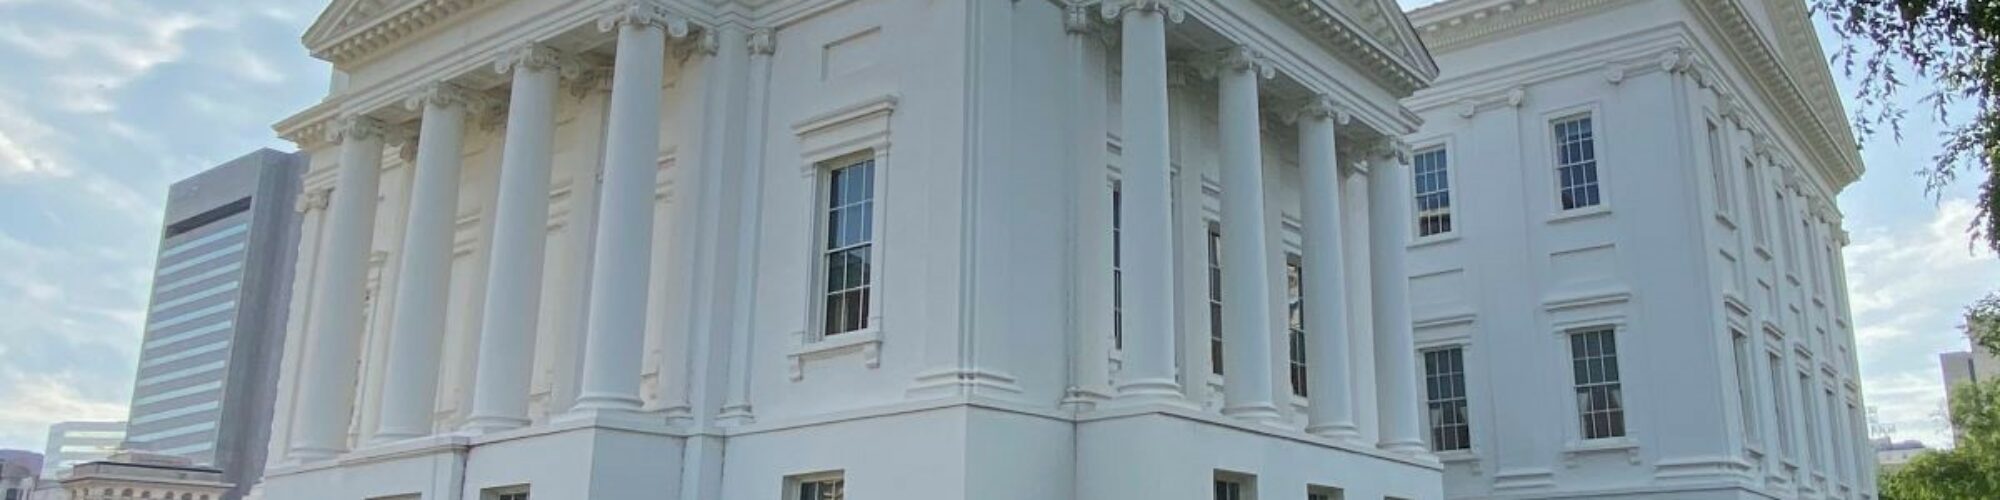 Virginia State Capitol Moisture Intrusion and Skylight Leakage Repair Design